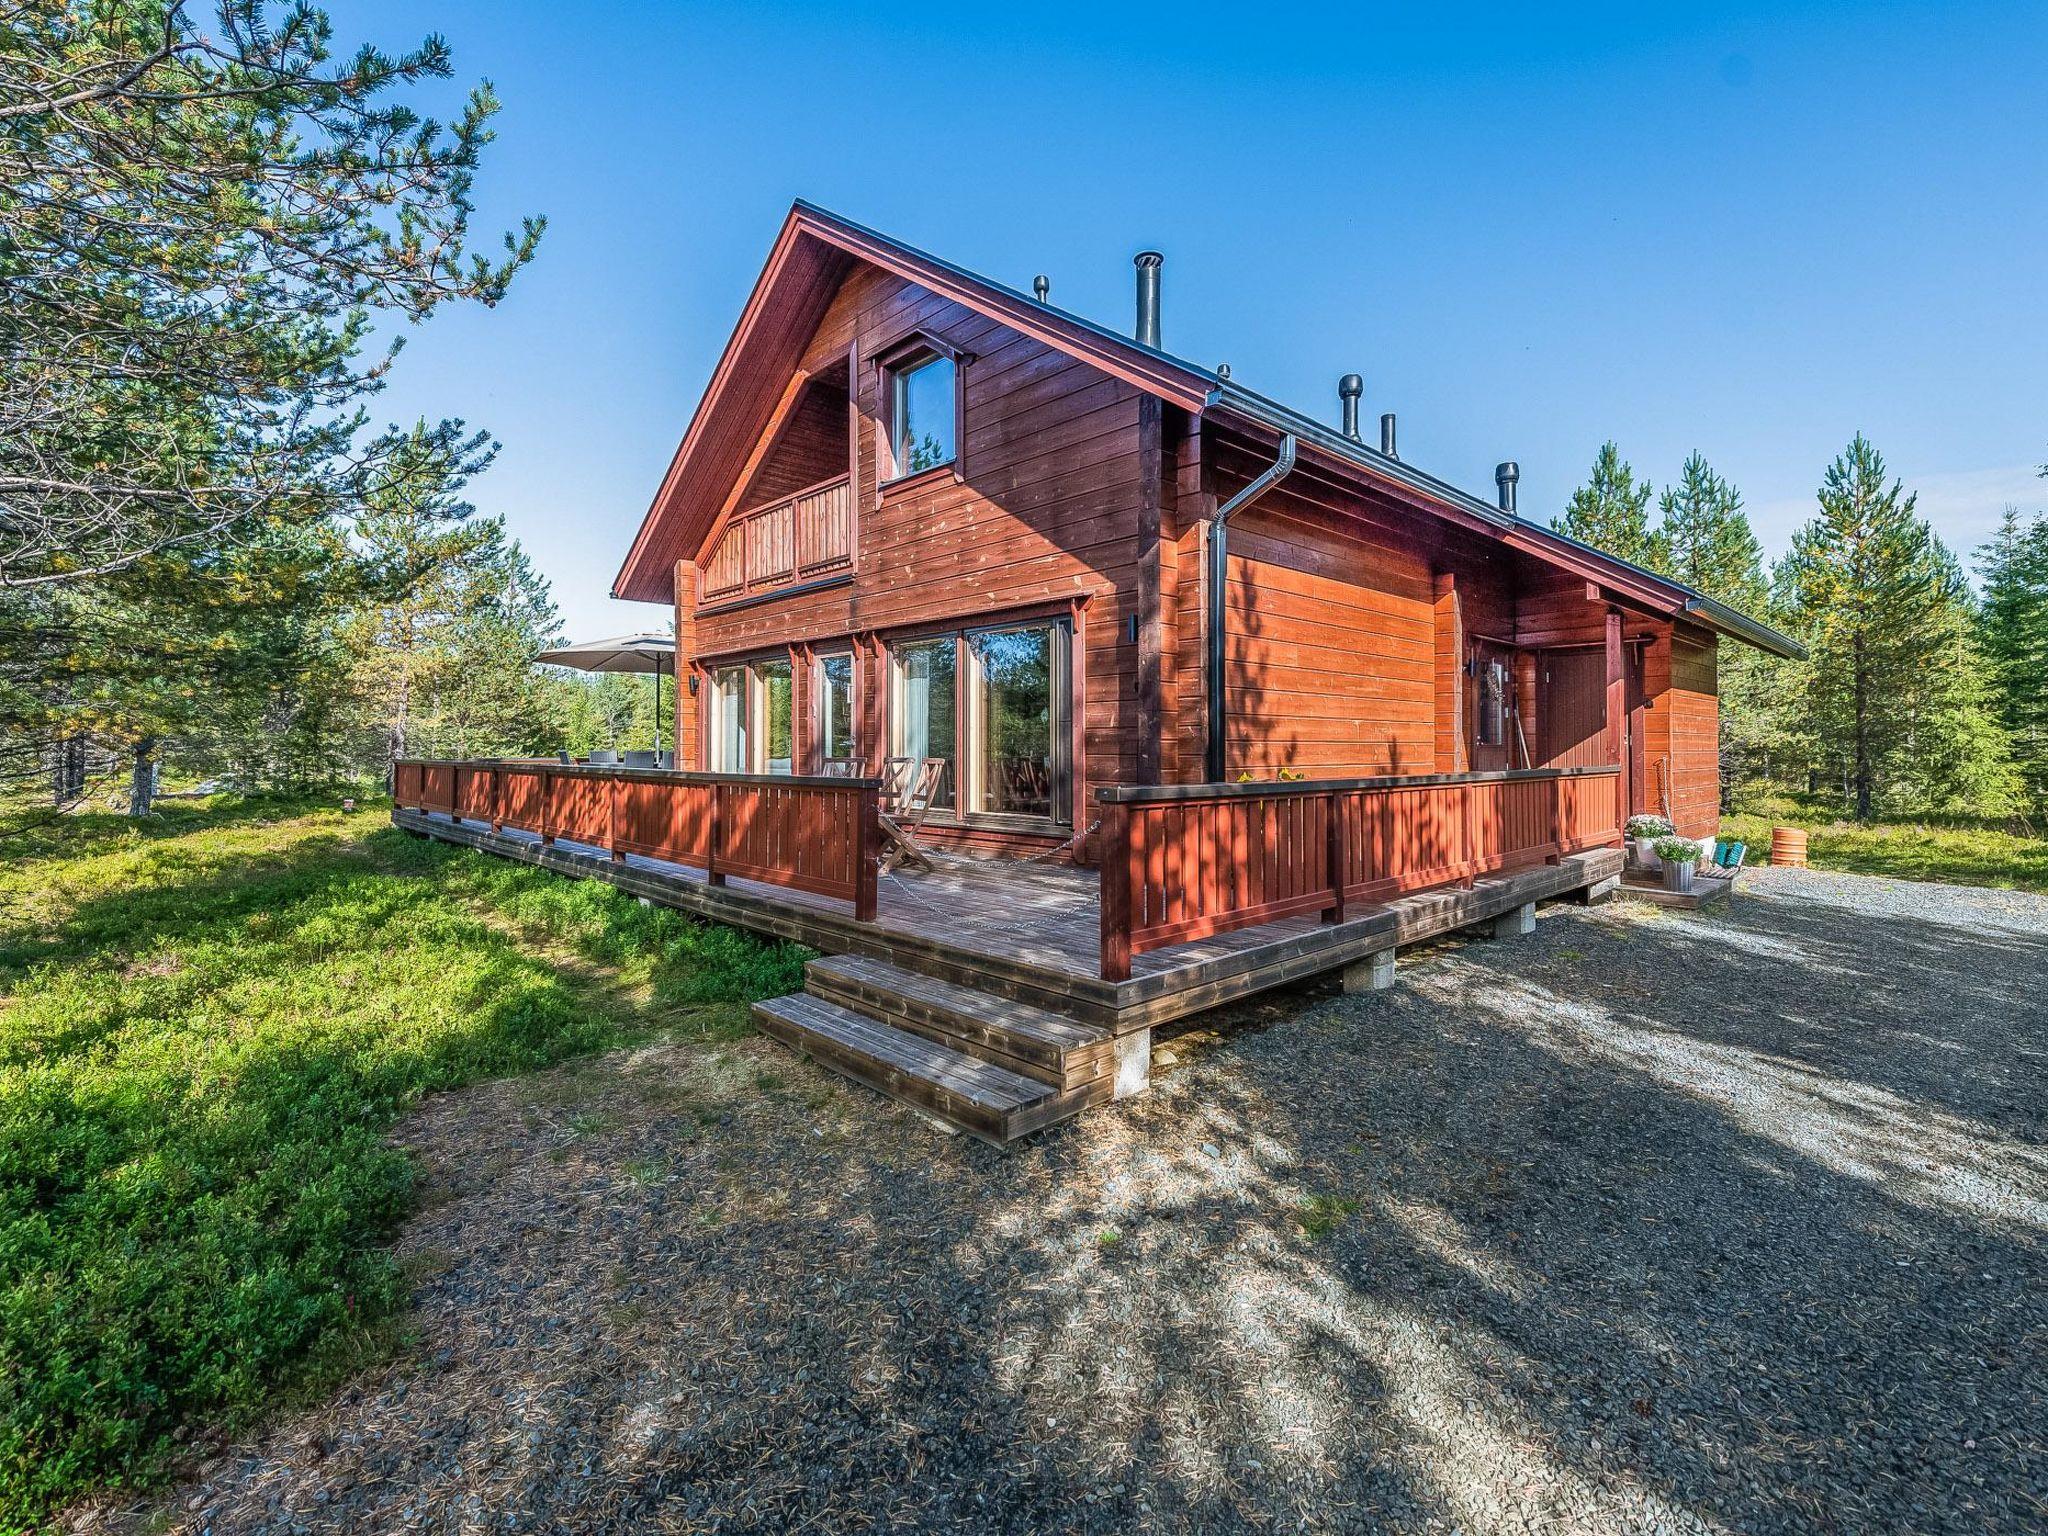 Photo 5 - 4 bedroom House in Kuusamo with sauna and mountain view